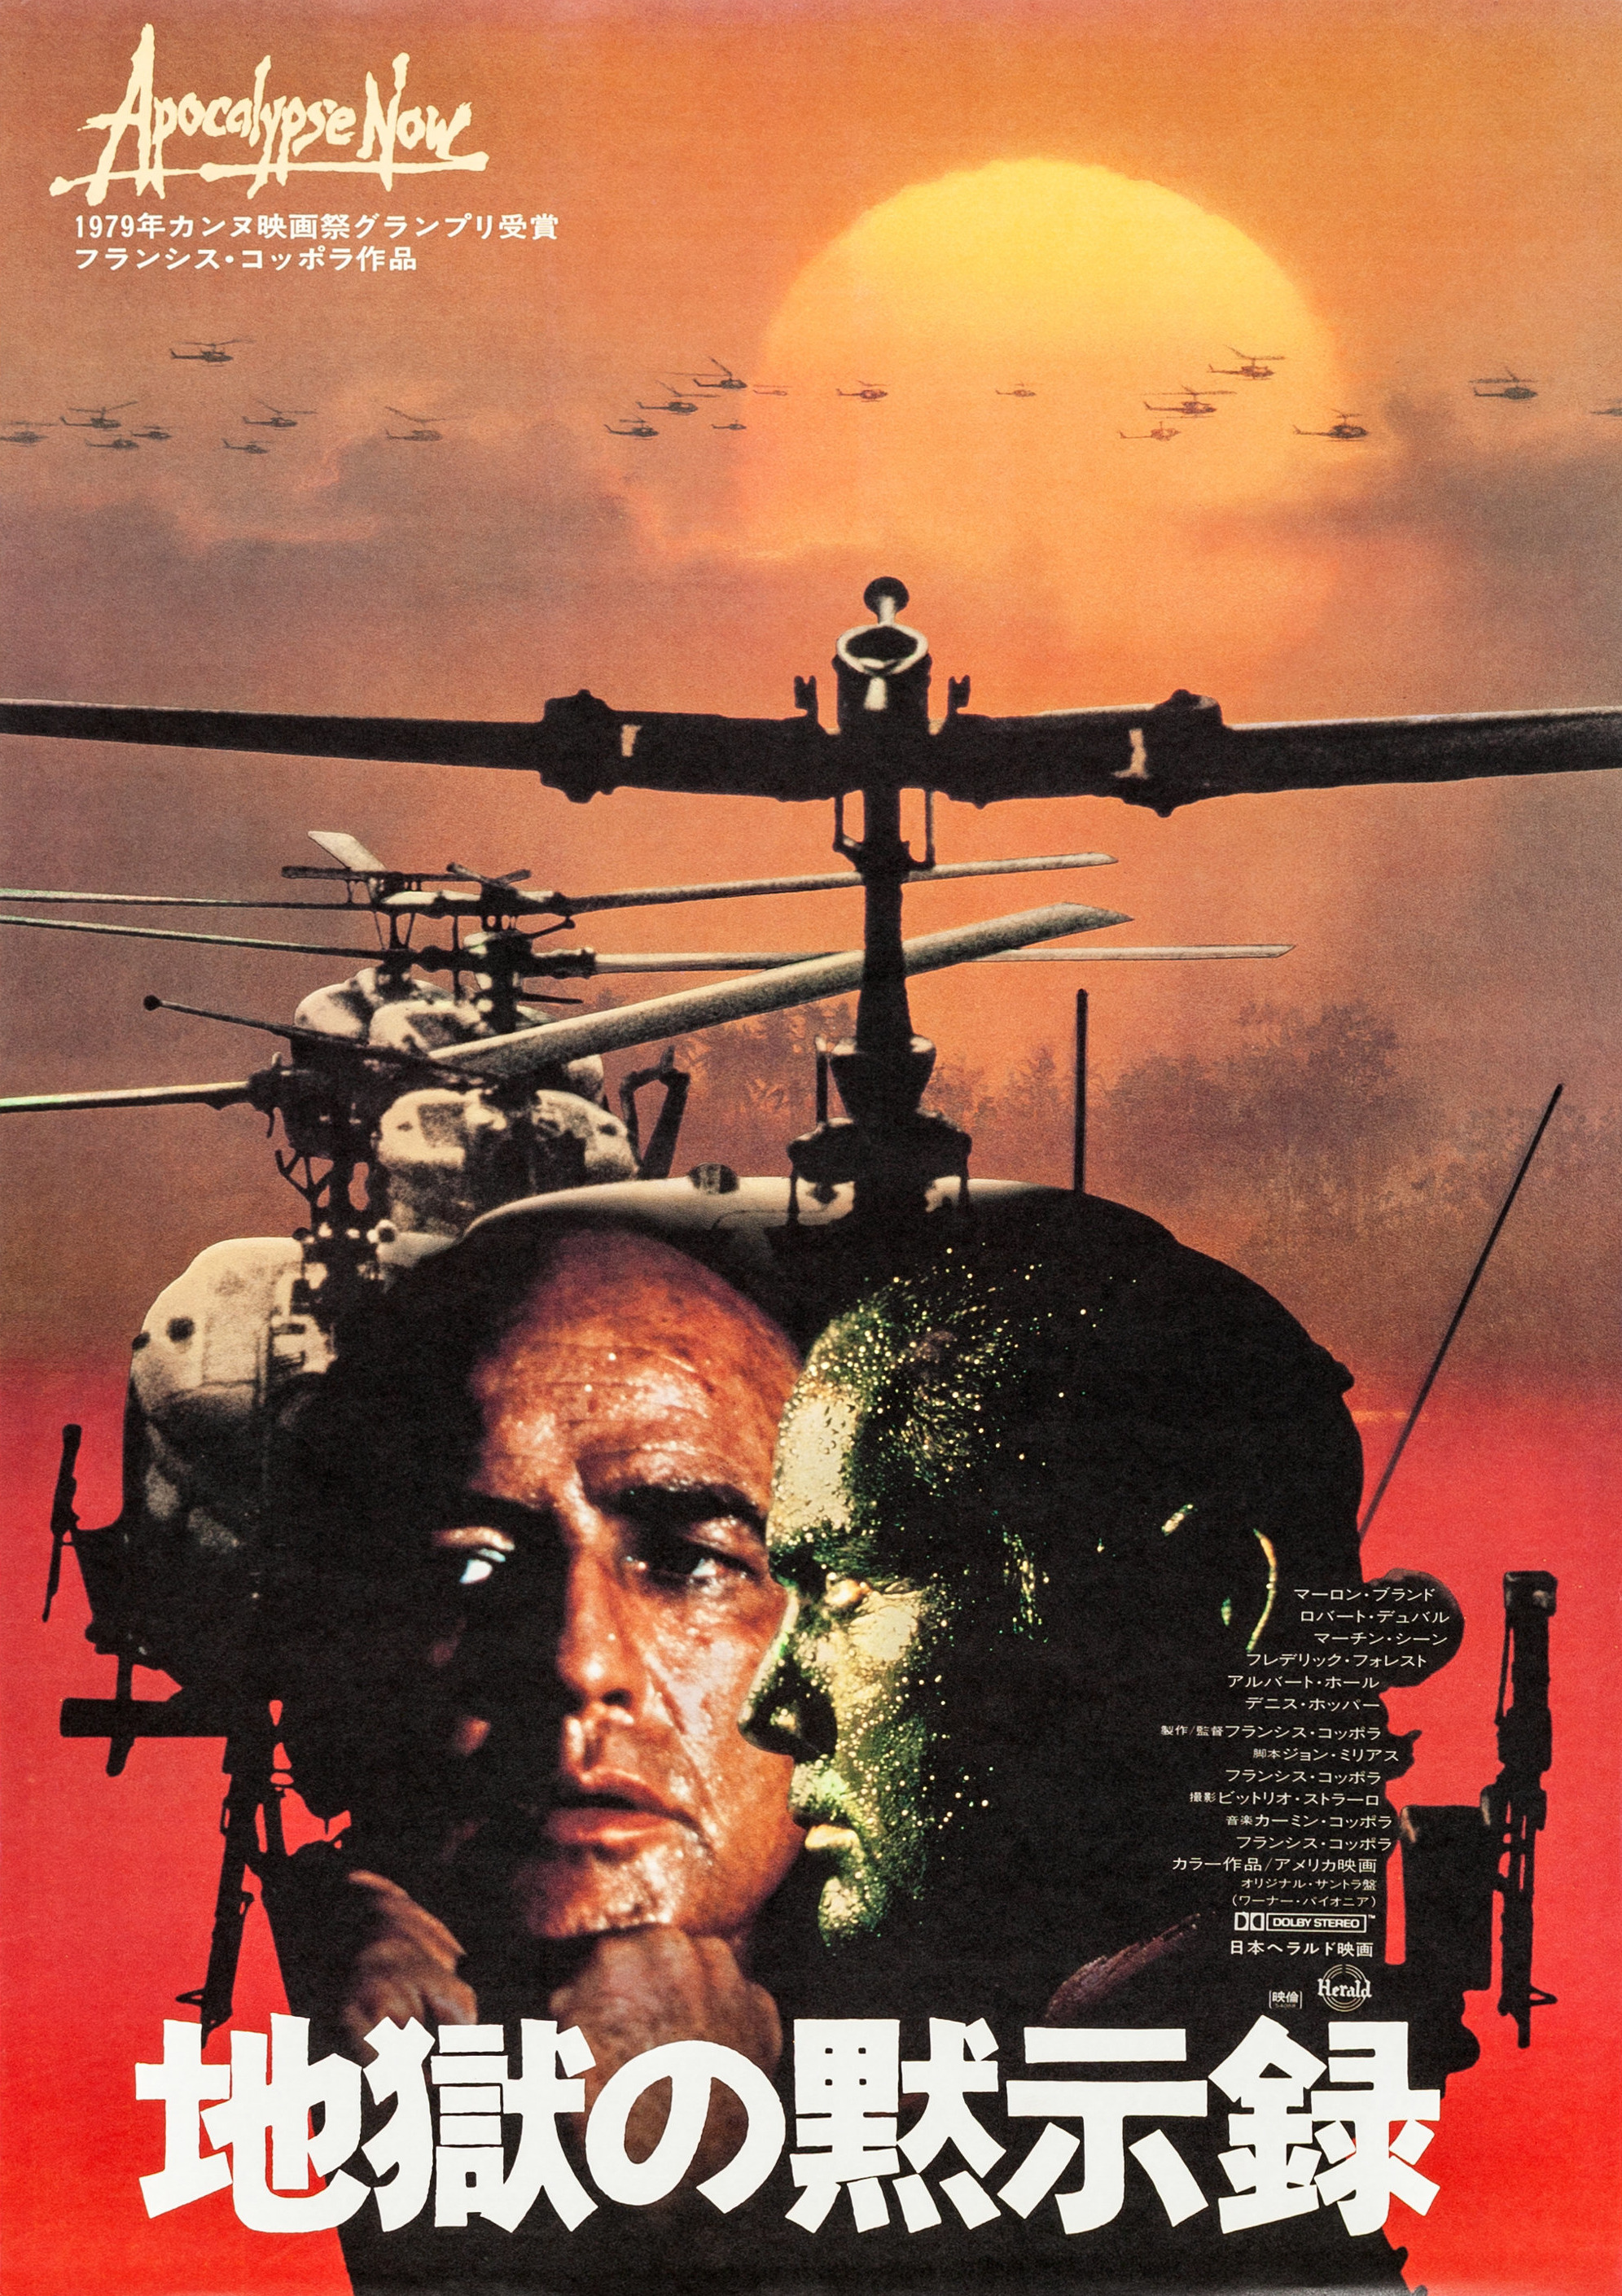 Mega Sized Movie Poster Image for Apocalypse Now (#11 of 11)